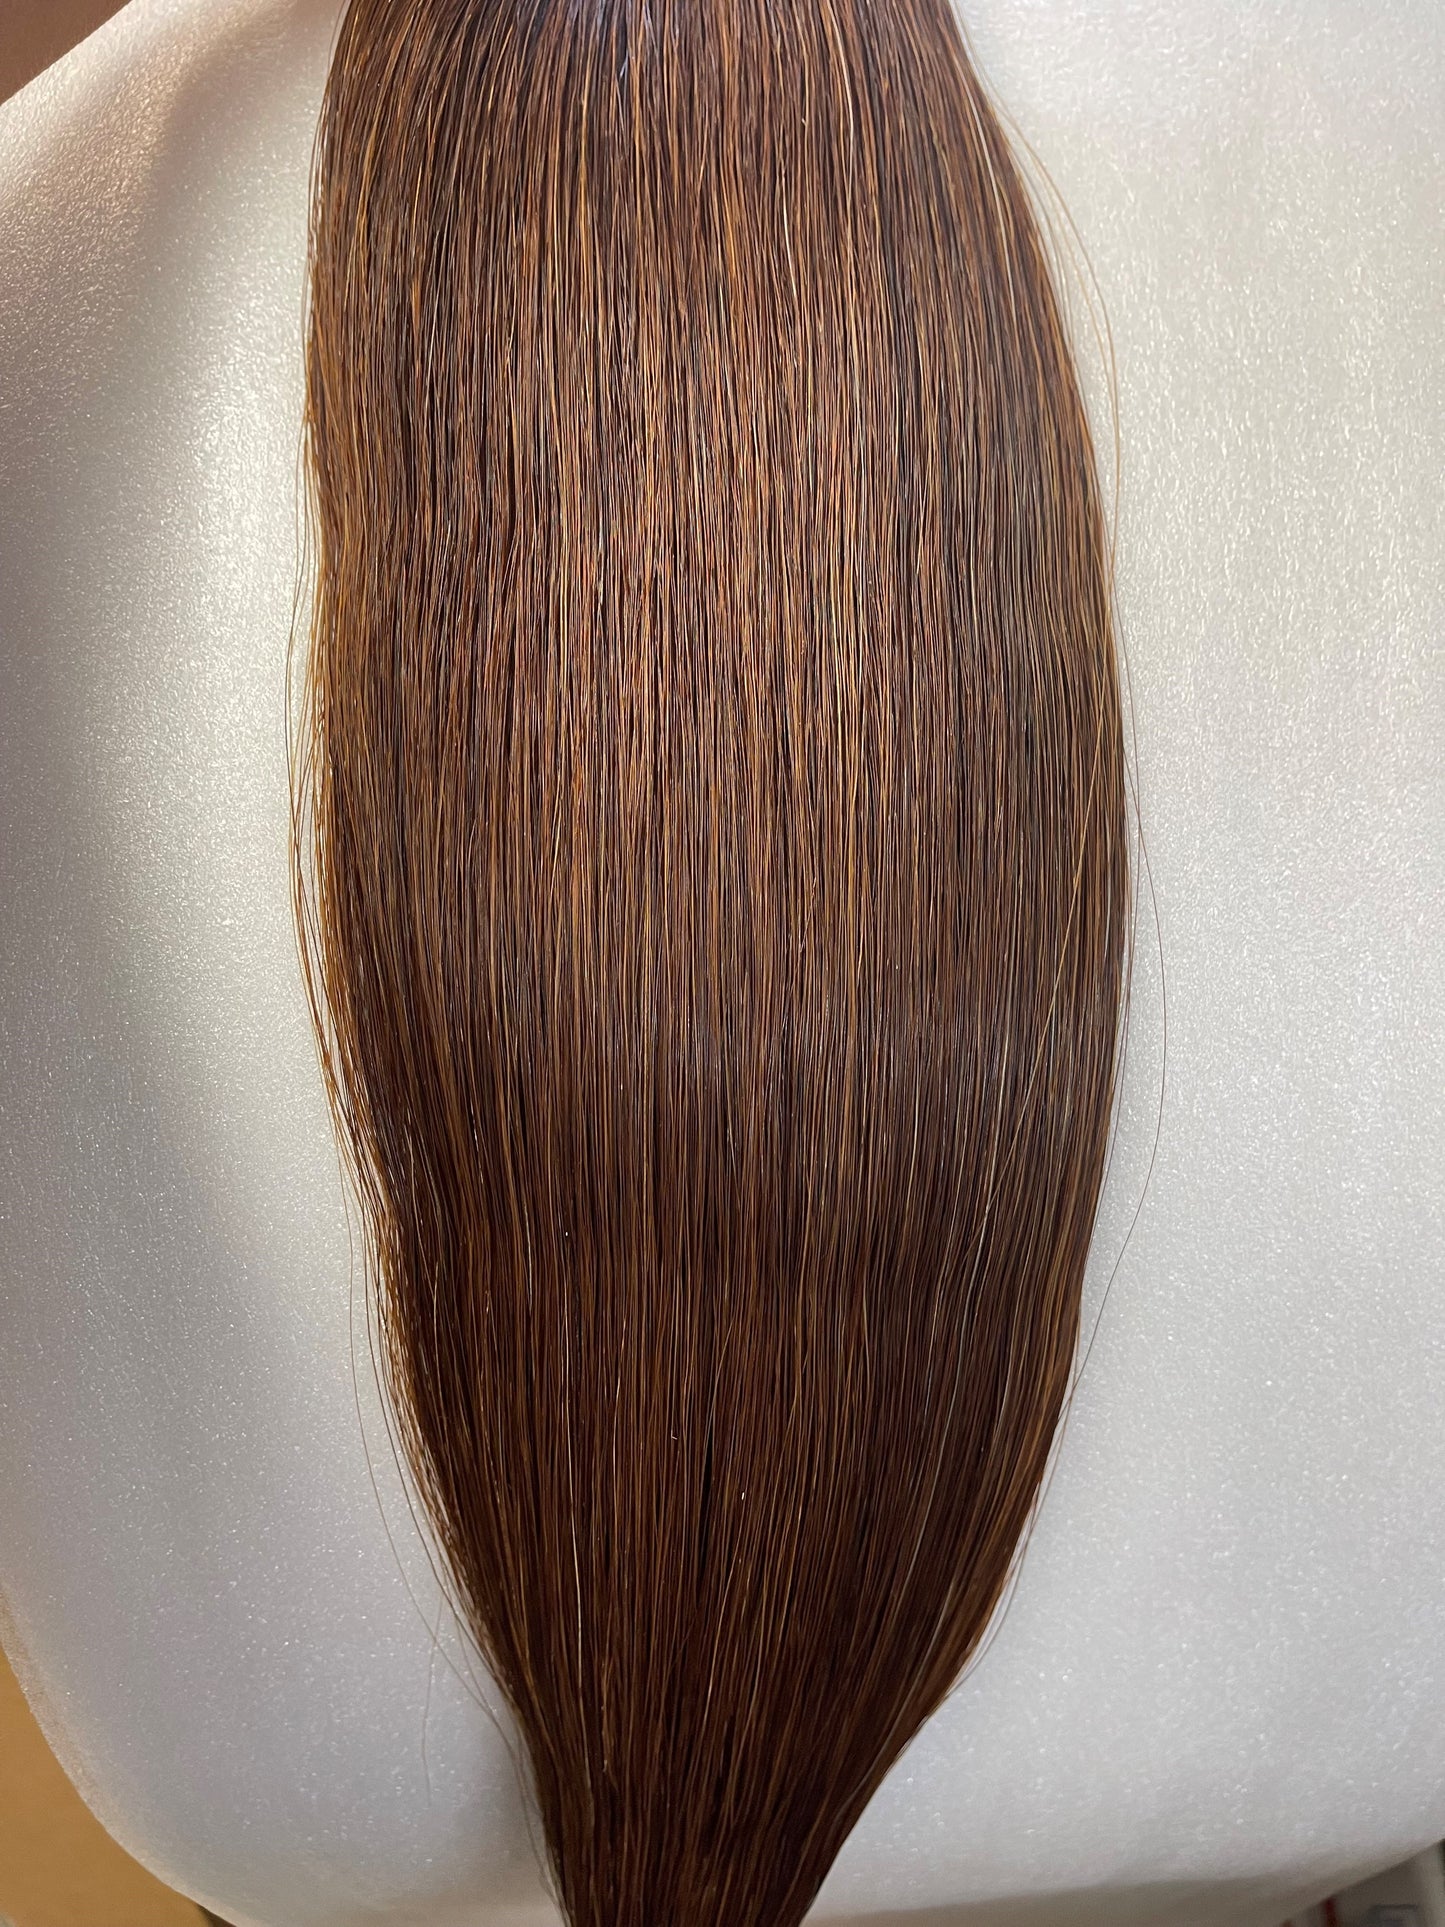 Regular Sorrel Horse Tail Hair